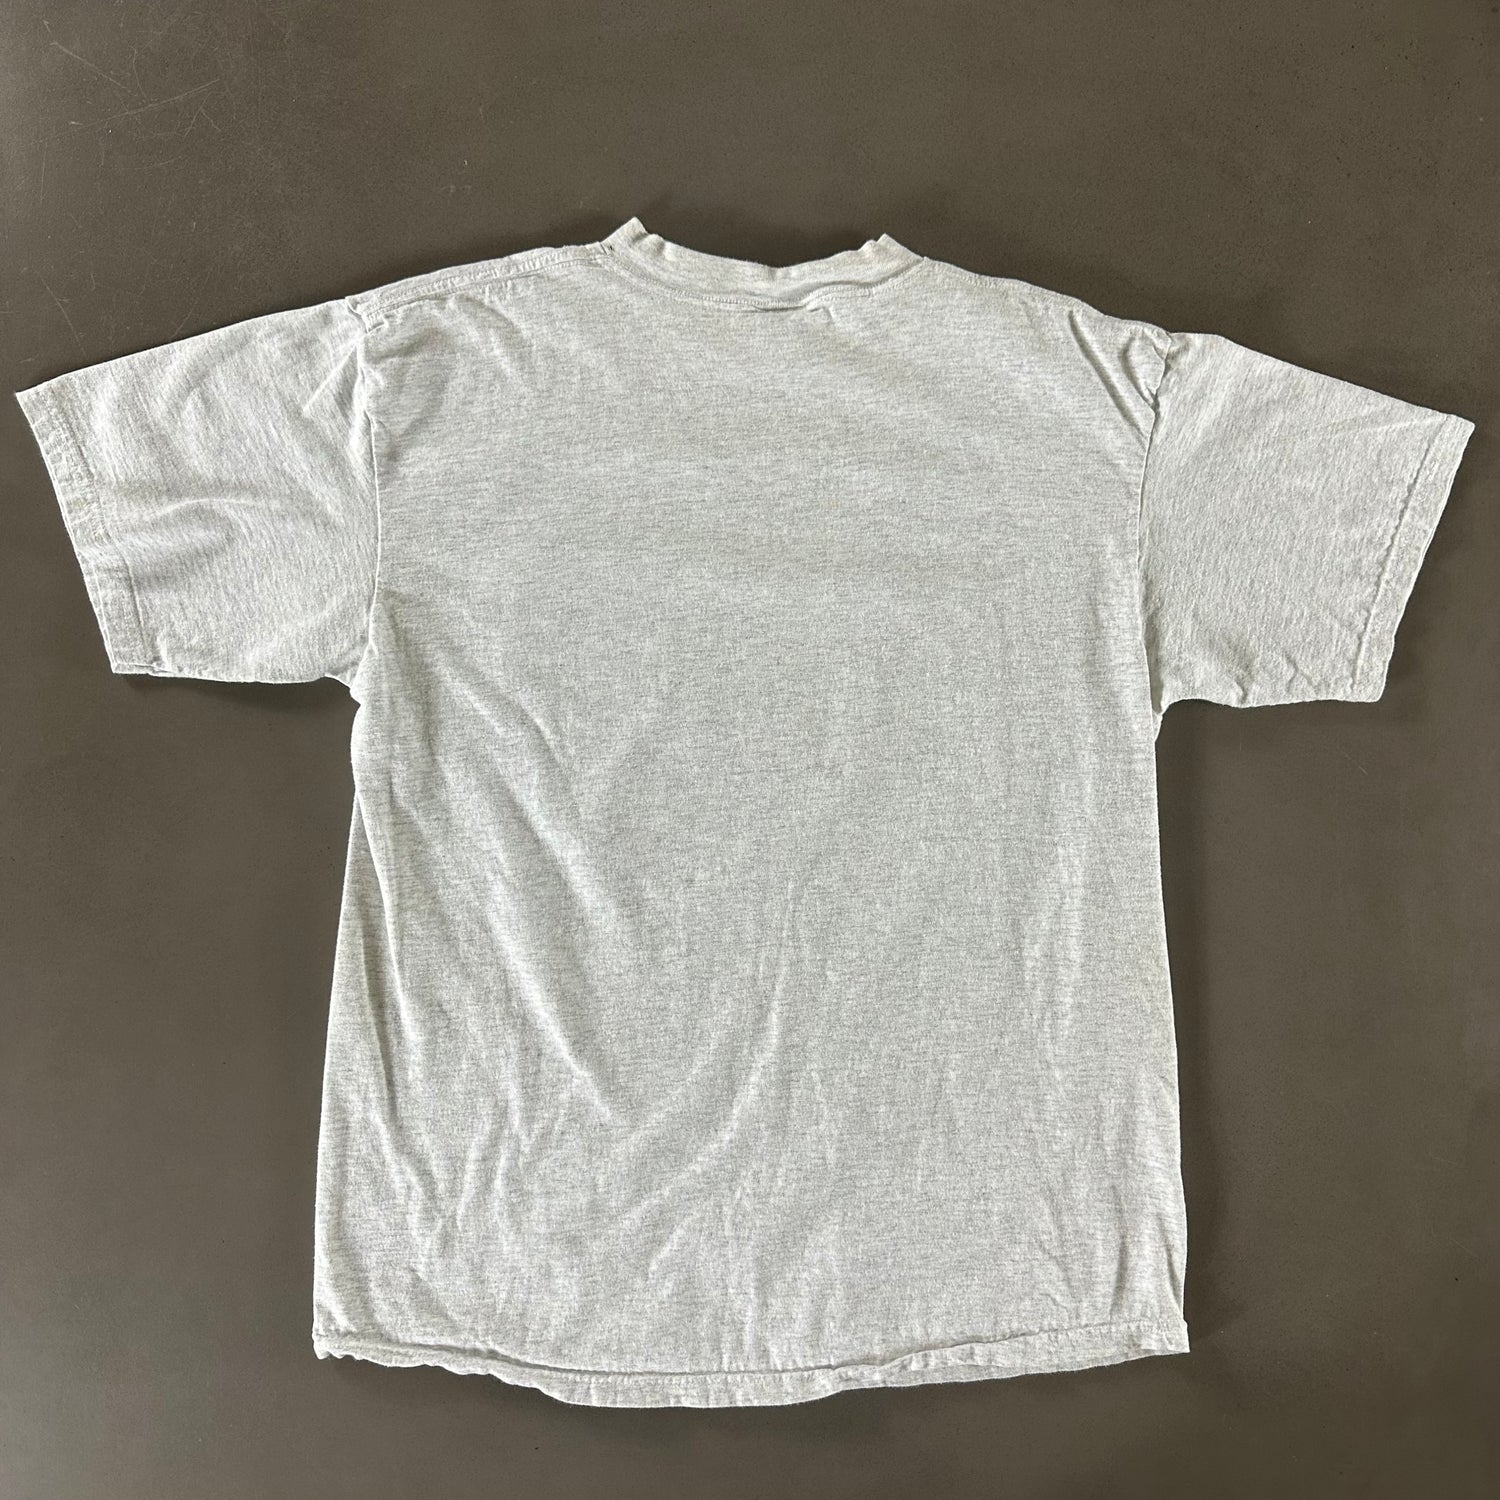 Vintage 1996 Carolina Panthers T-shirt size XL